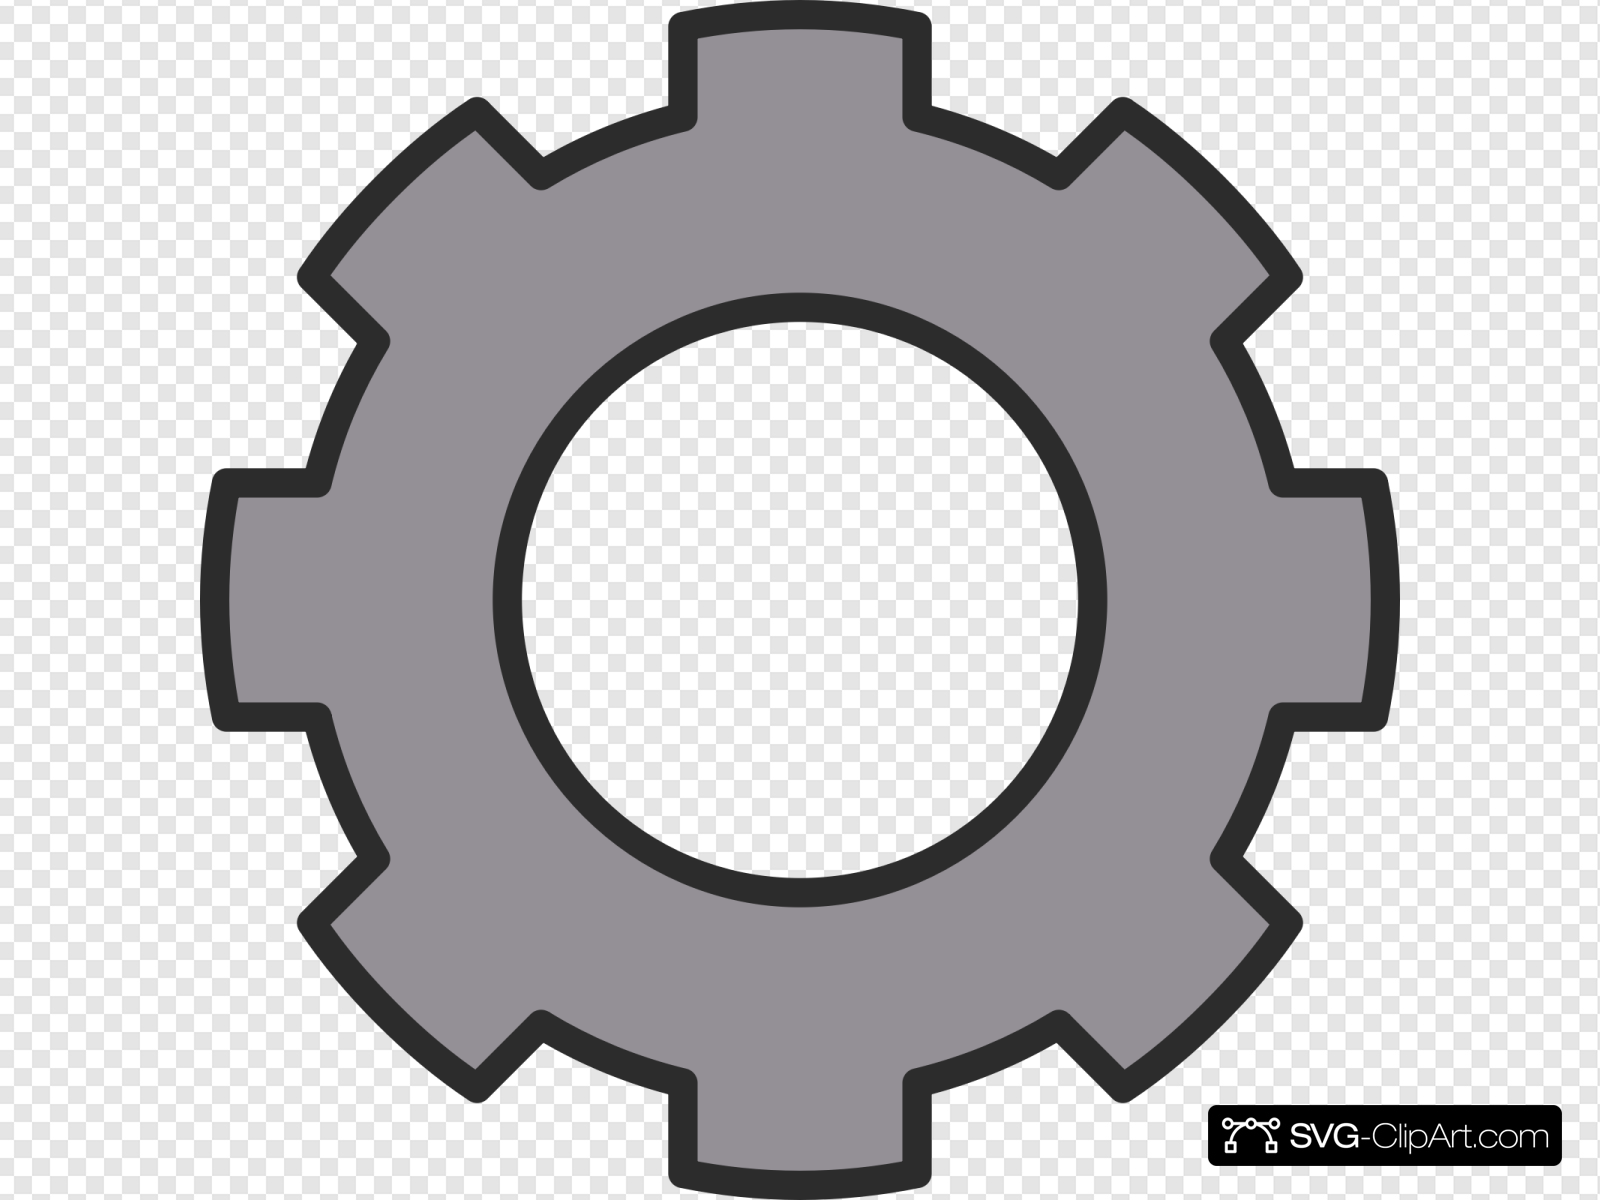 Gear Clip art, Icon and SVG